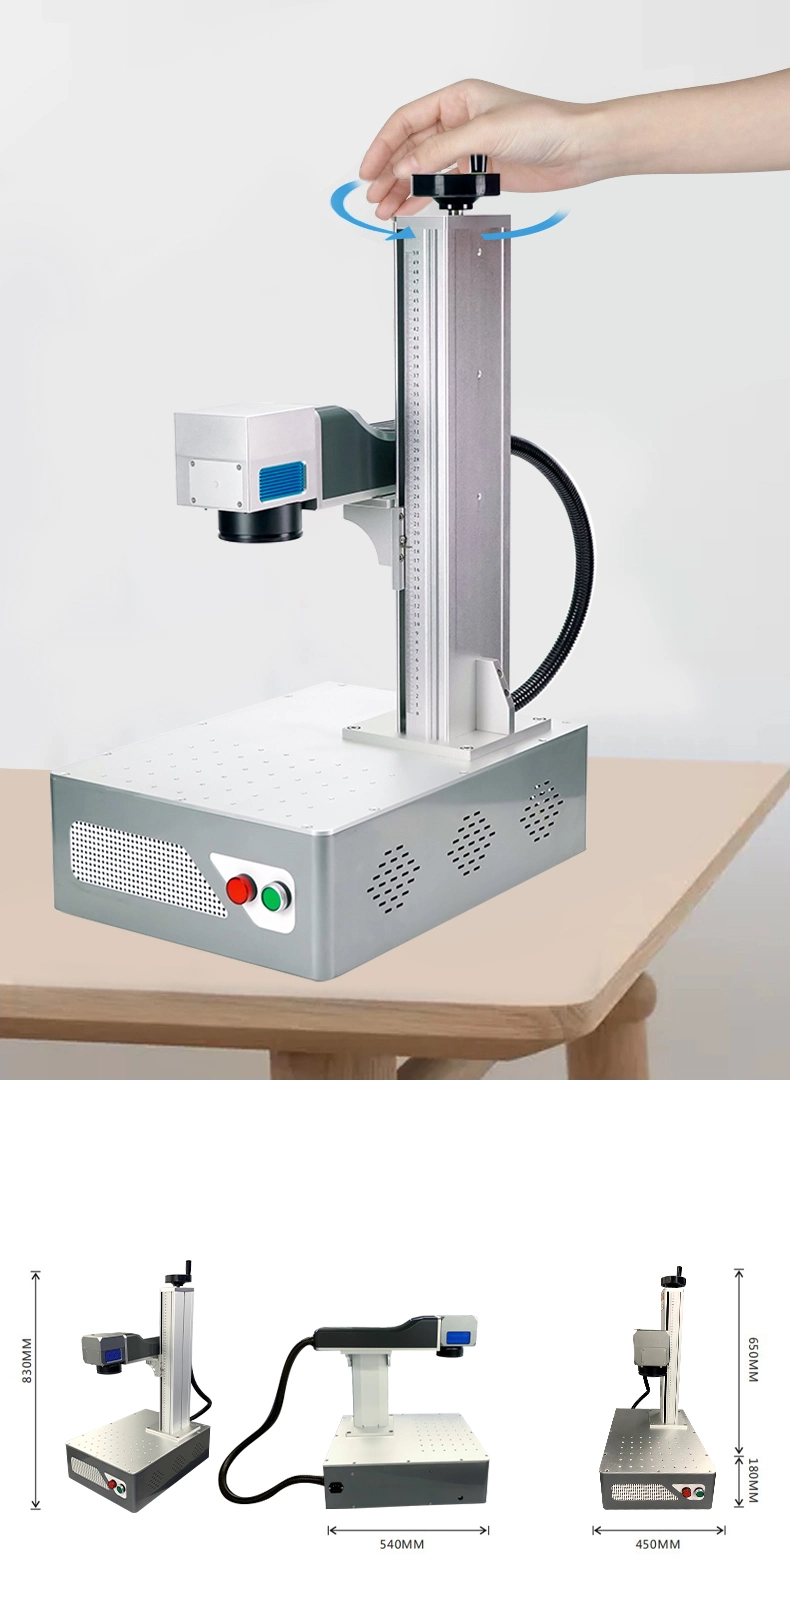 Faith 20/30/50/80W/100W 3D Color CO2 UV Fiber Production Line Galvo Fiber Laser Printer Marking CNC Engraving Machine for PVC PE Pipe